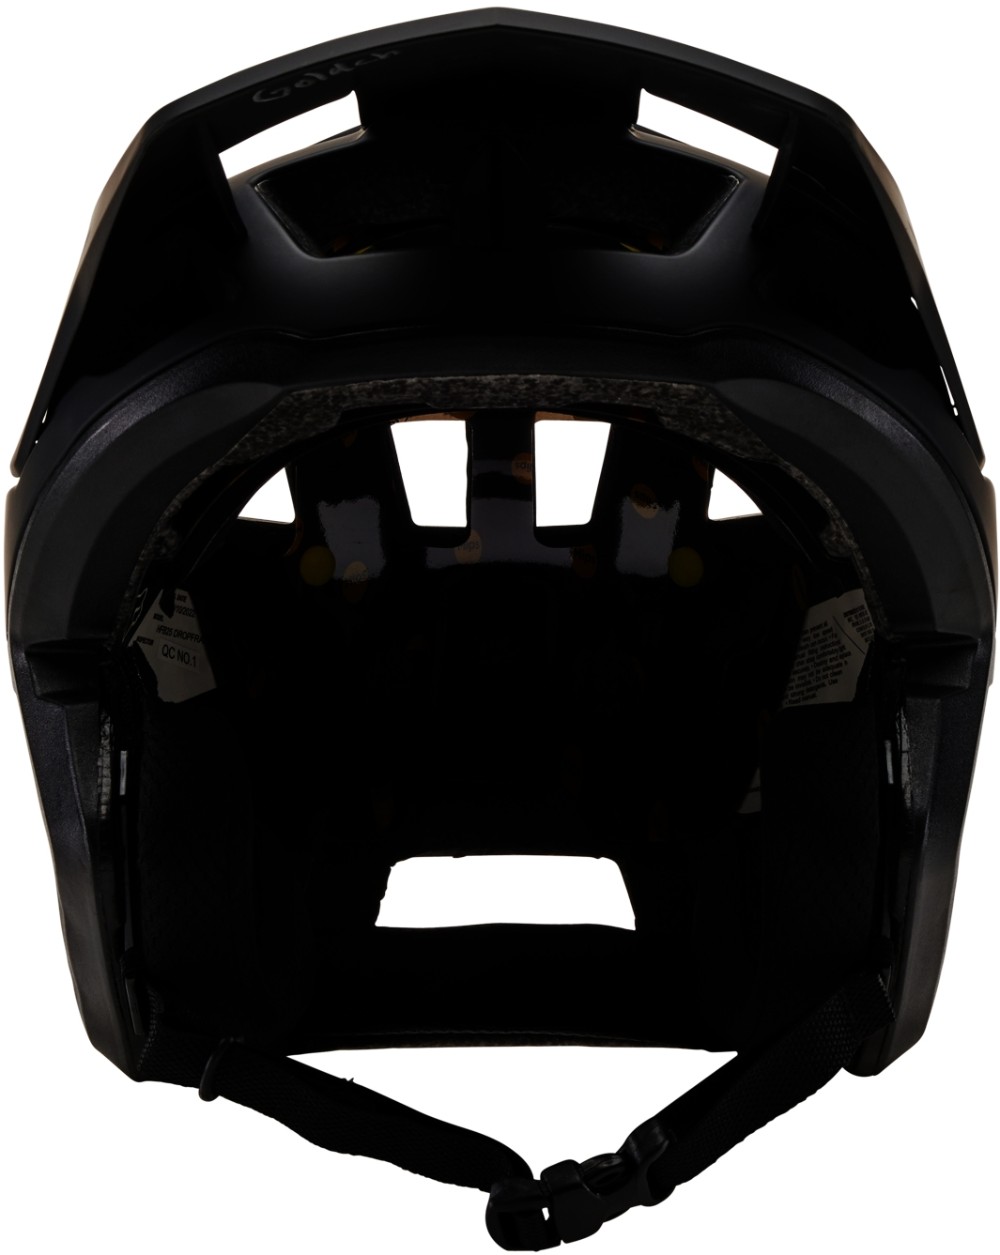 Dropframe MTB Cycling Helmet image 2